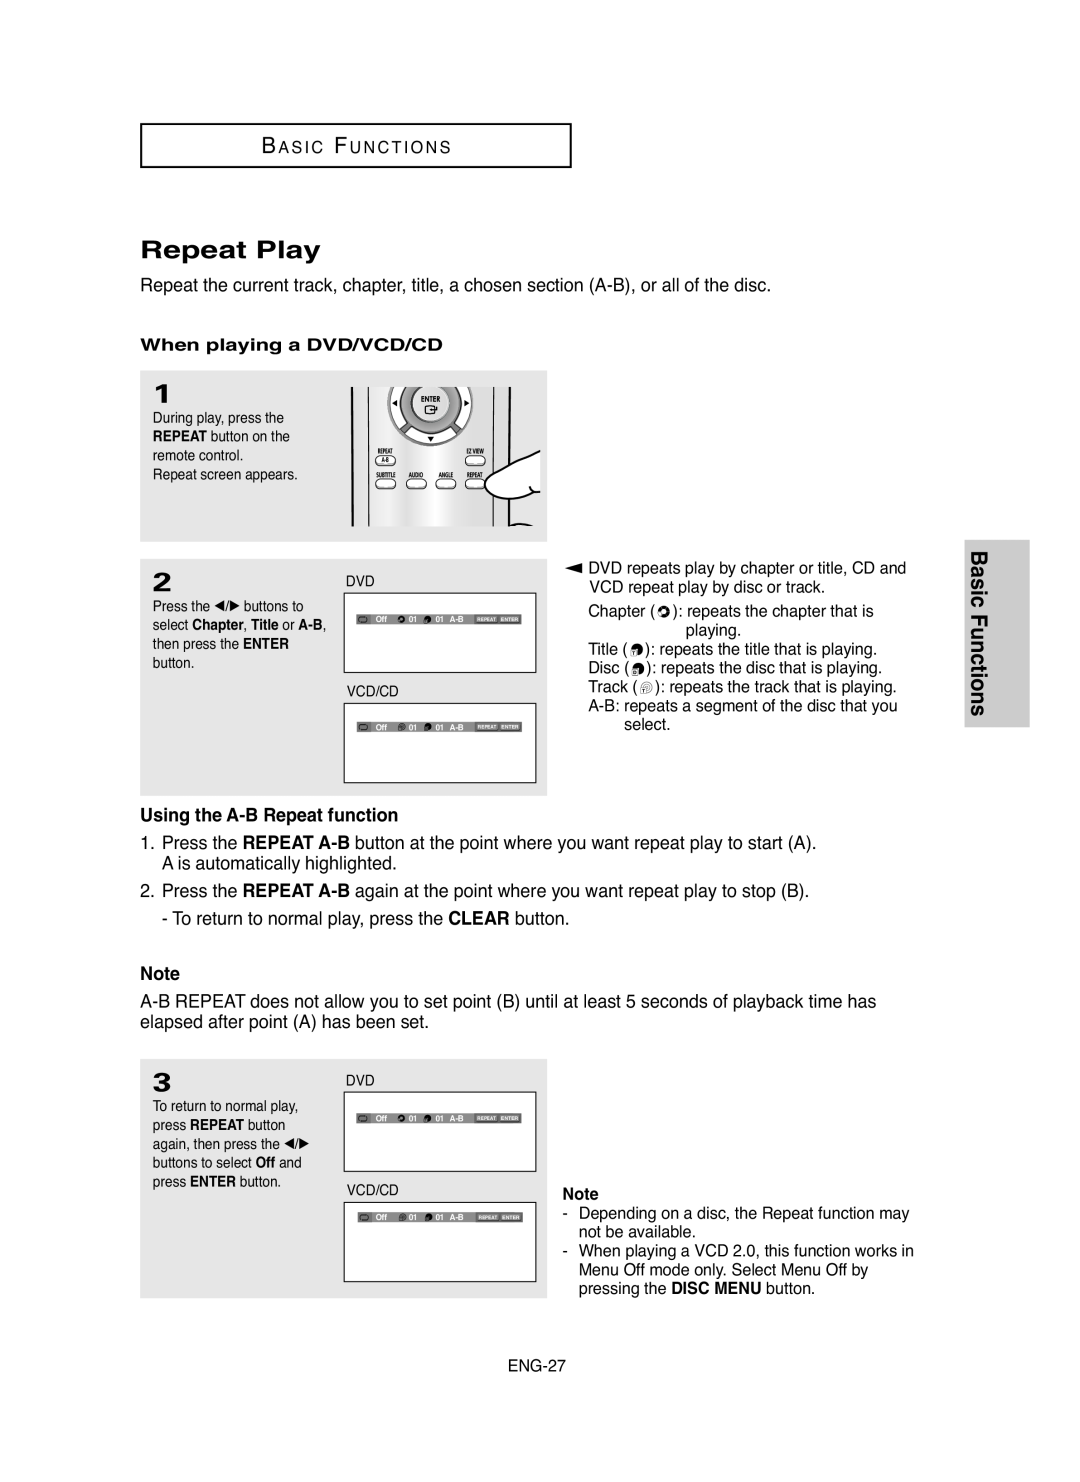 Samsung DVD-HD755 manual Repeat Play, When playing a DVD/VCD/CD 